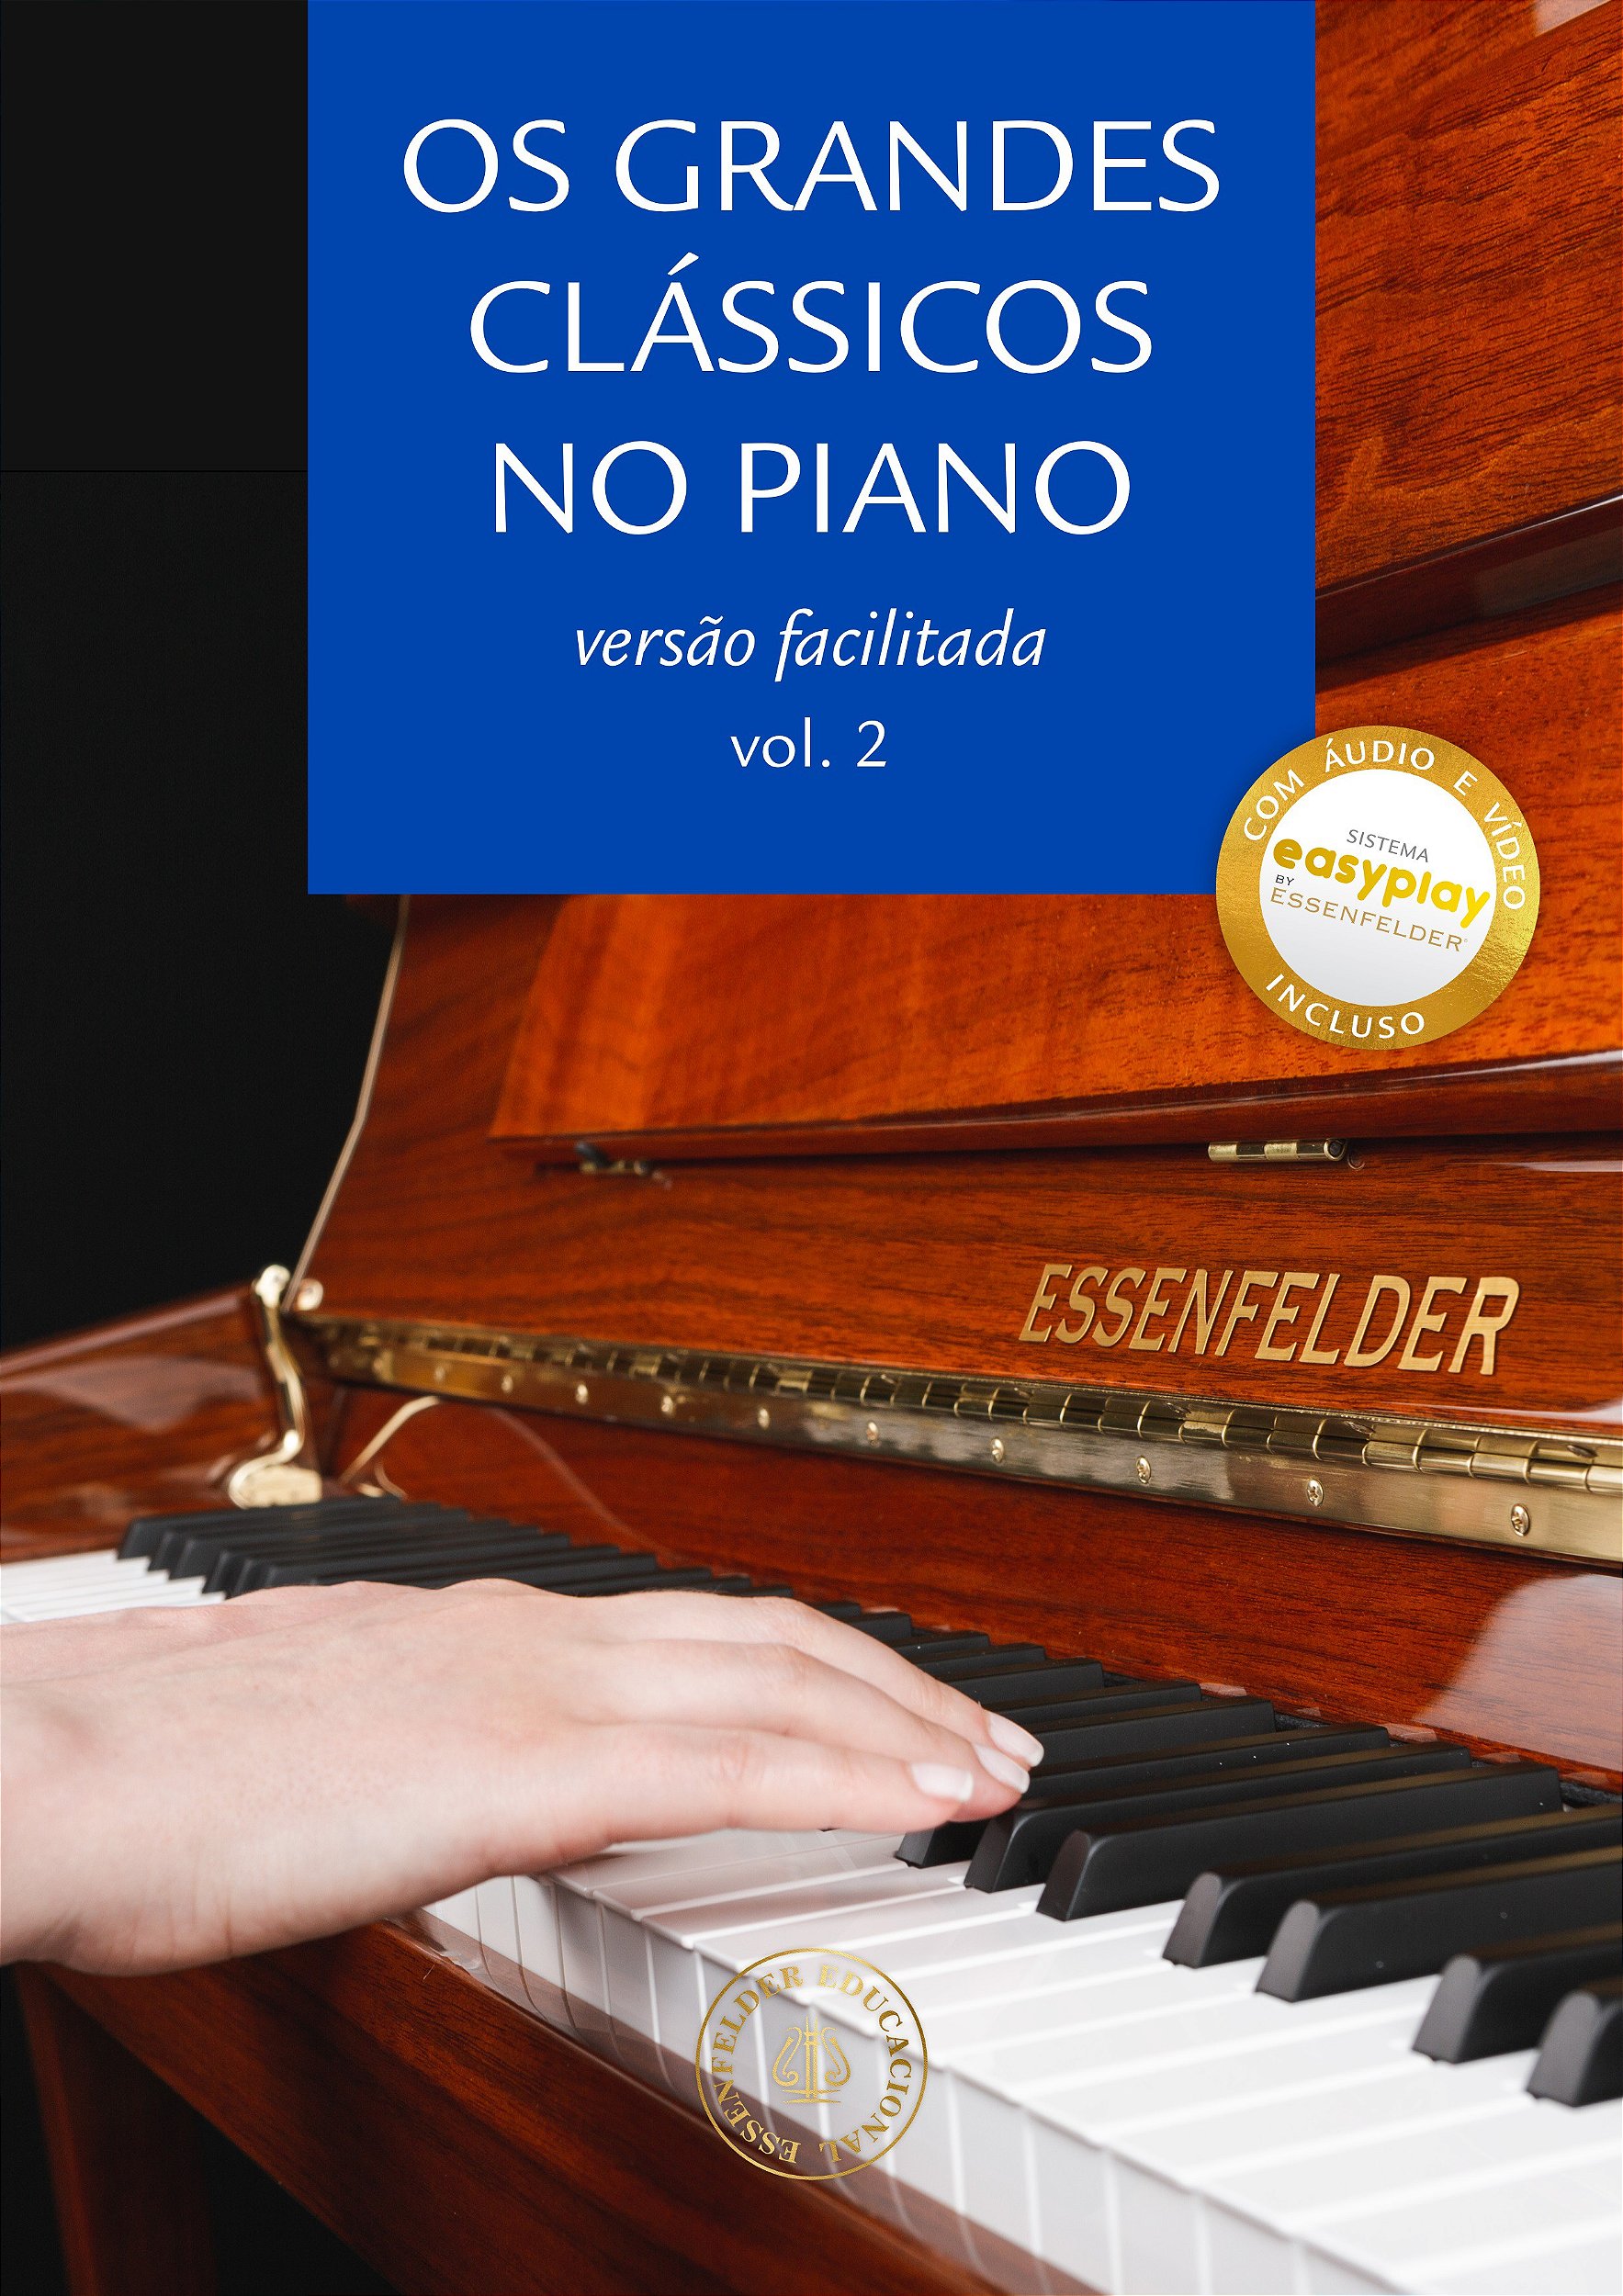 LIVRO DE PARTITURAS PARA PIANO VOLUME 1